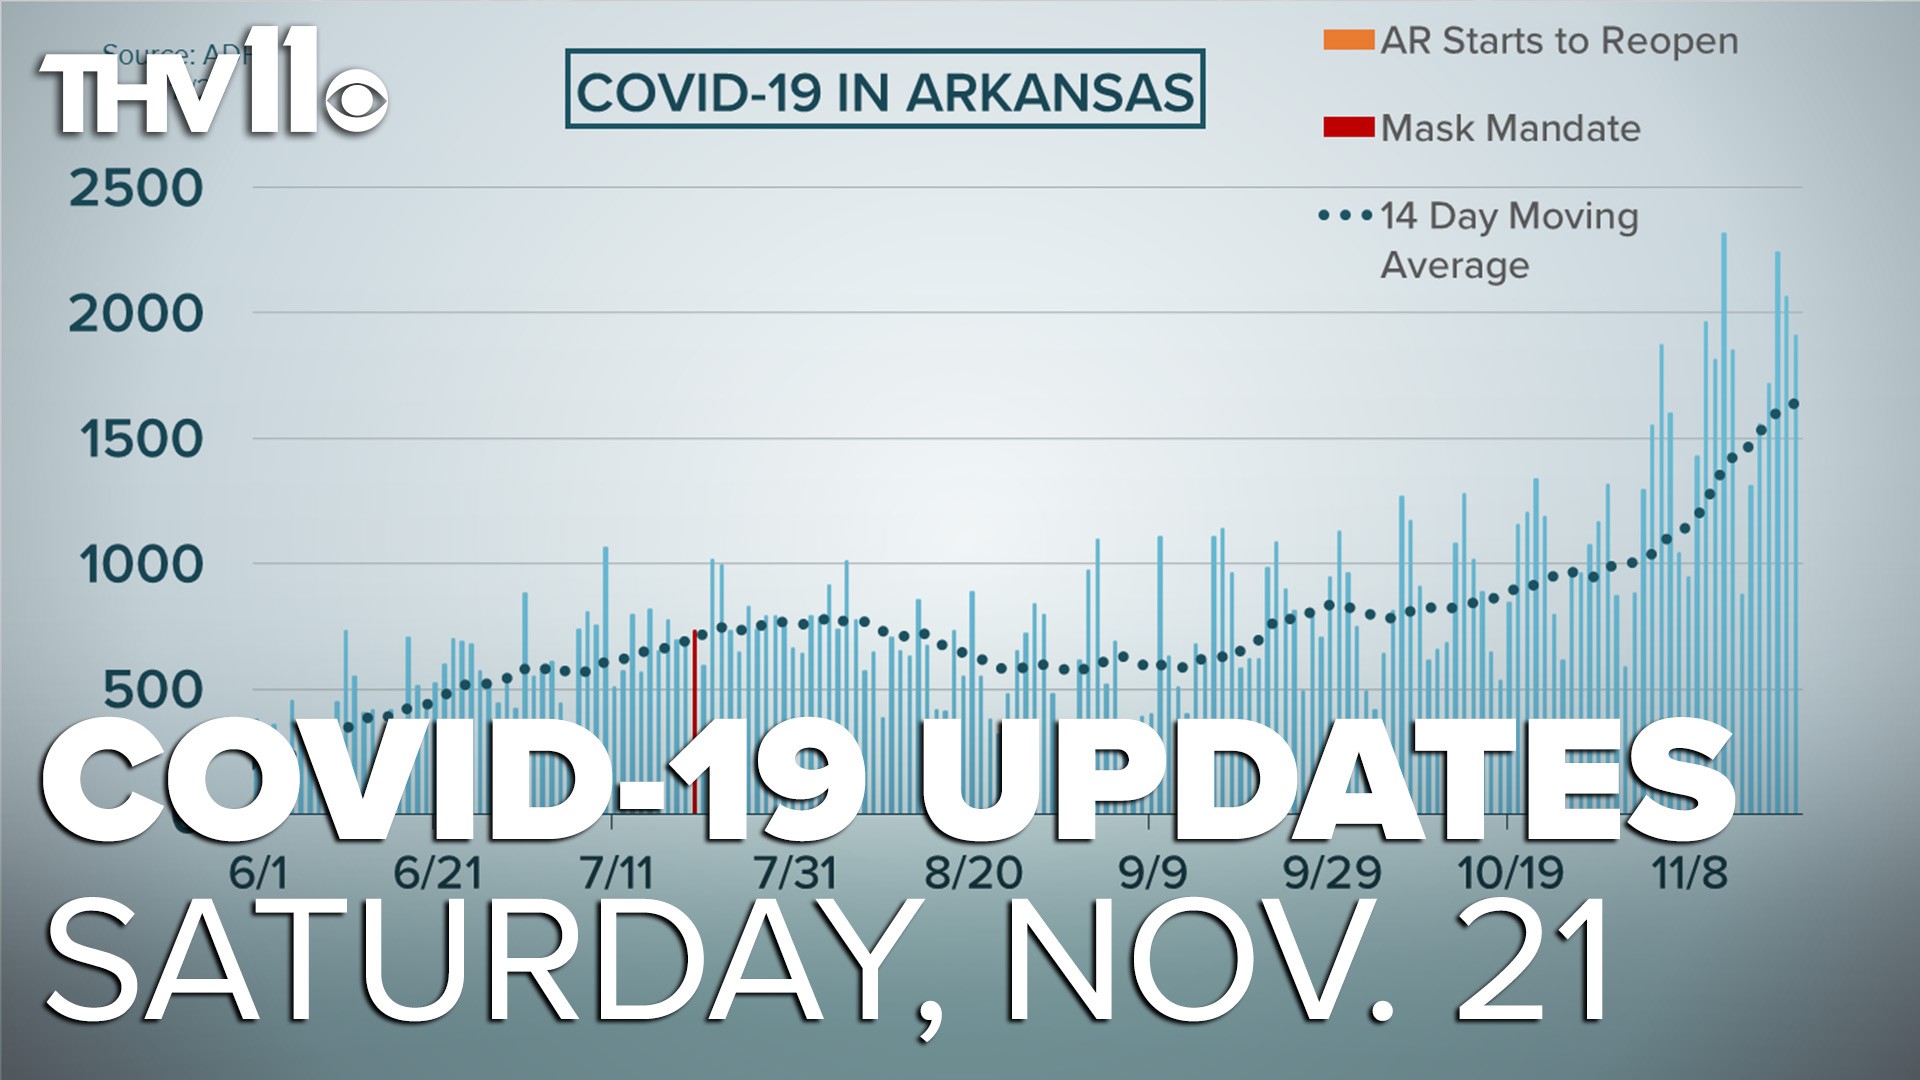 Melissa Zygowicz provides an update on coronavirus in Arkansas for Saturday, November 21.